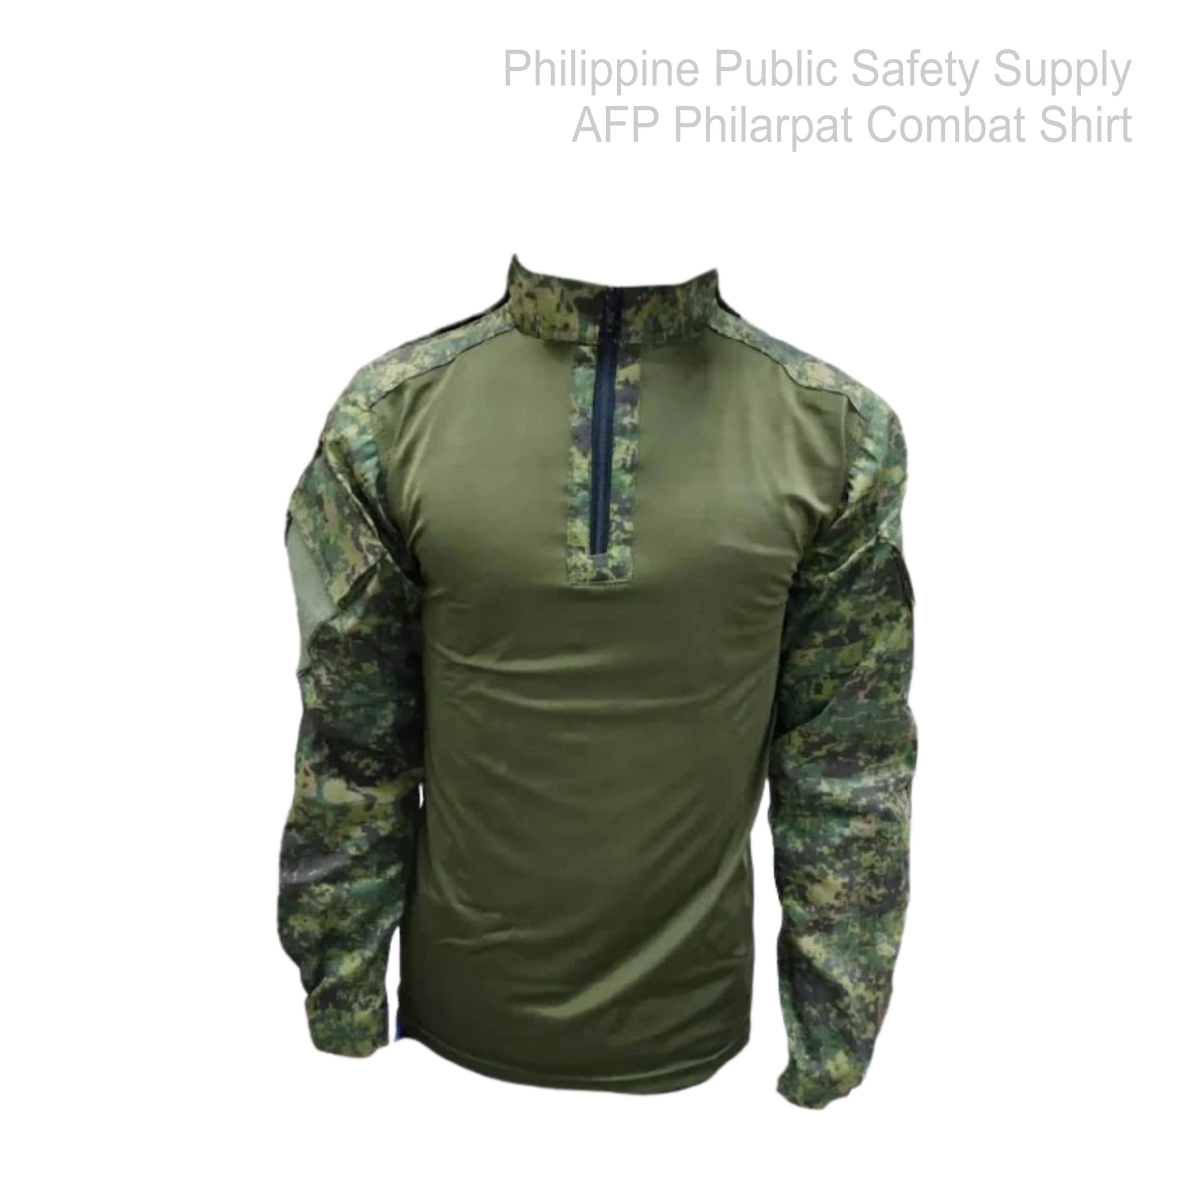 Philippine Army Philarpat Combat Shirt AFP philippinepublicsafetysupply